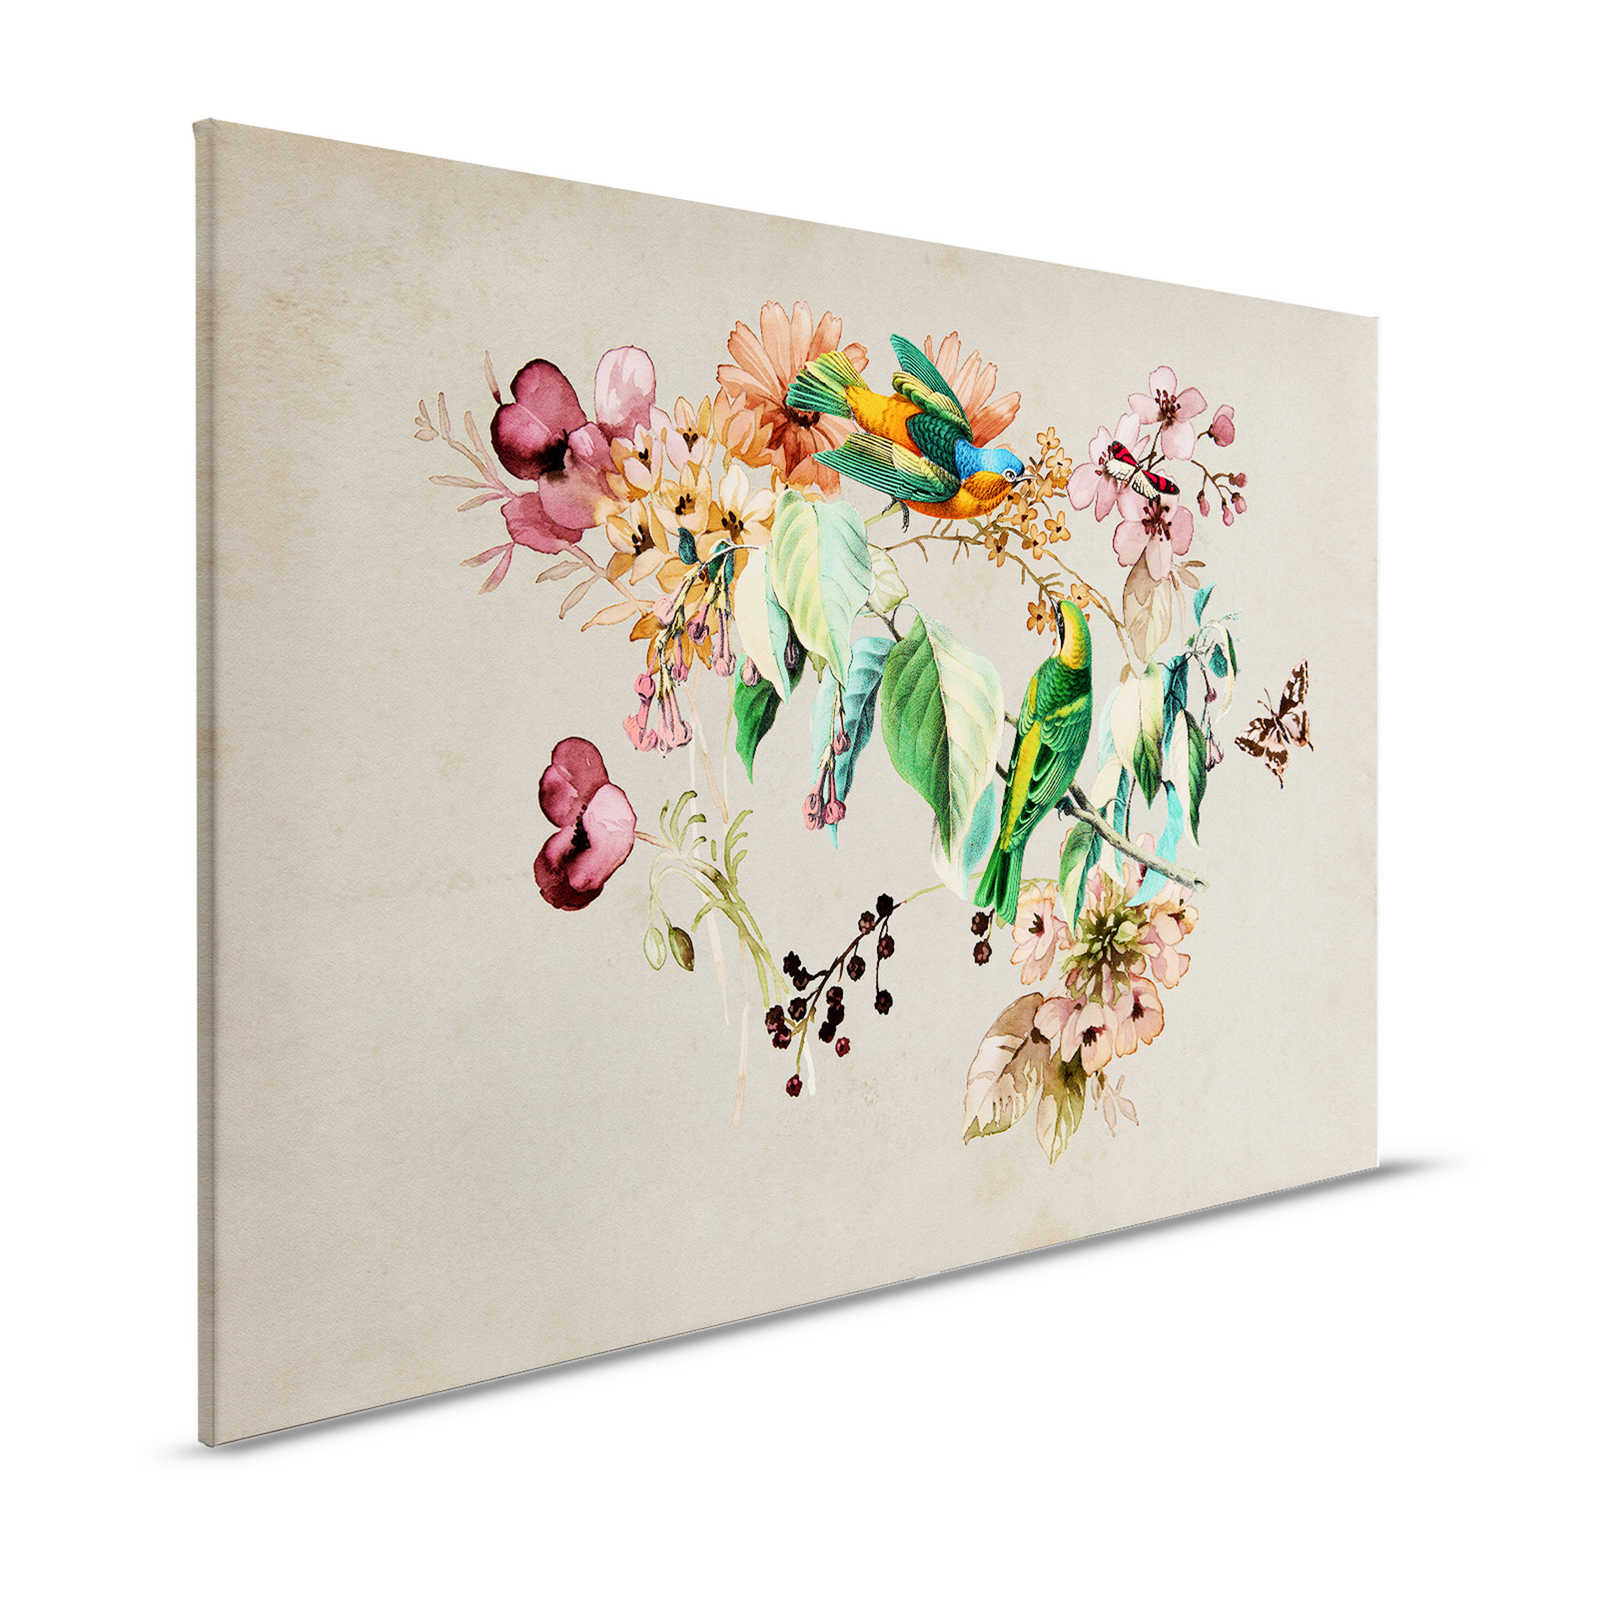 Love Nest 1 - Leinwandbild mit Aquarell Blüten & bunten Vögeln – 1,20 m x 0,80 m
